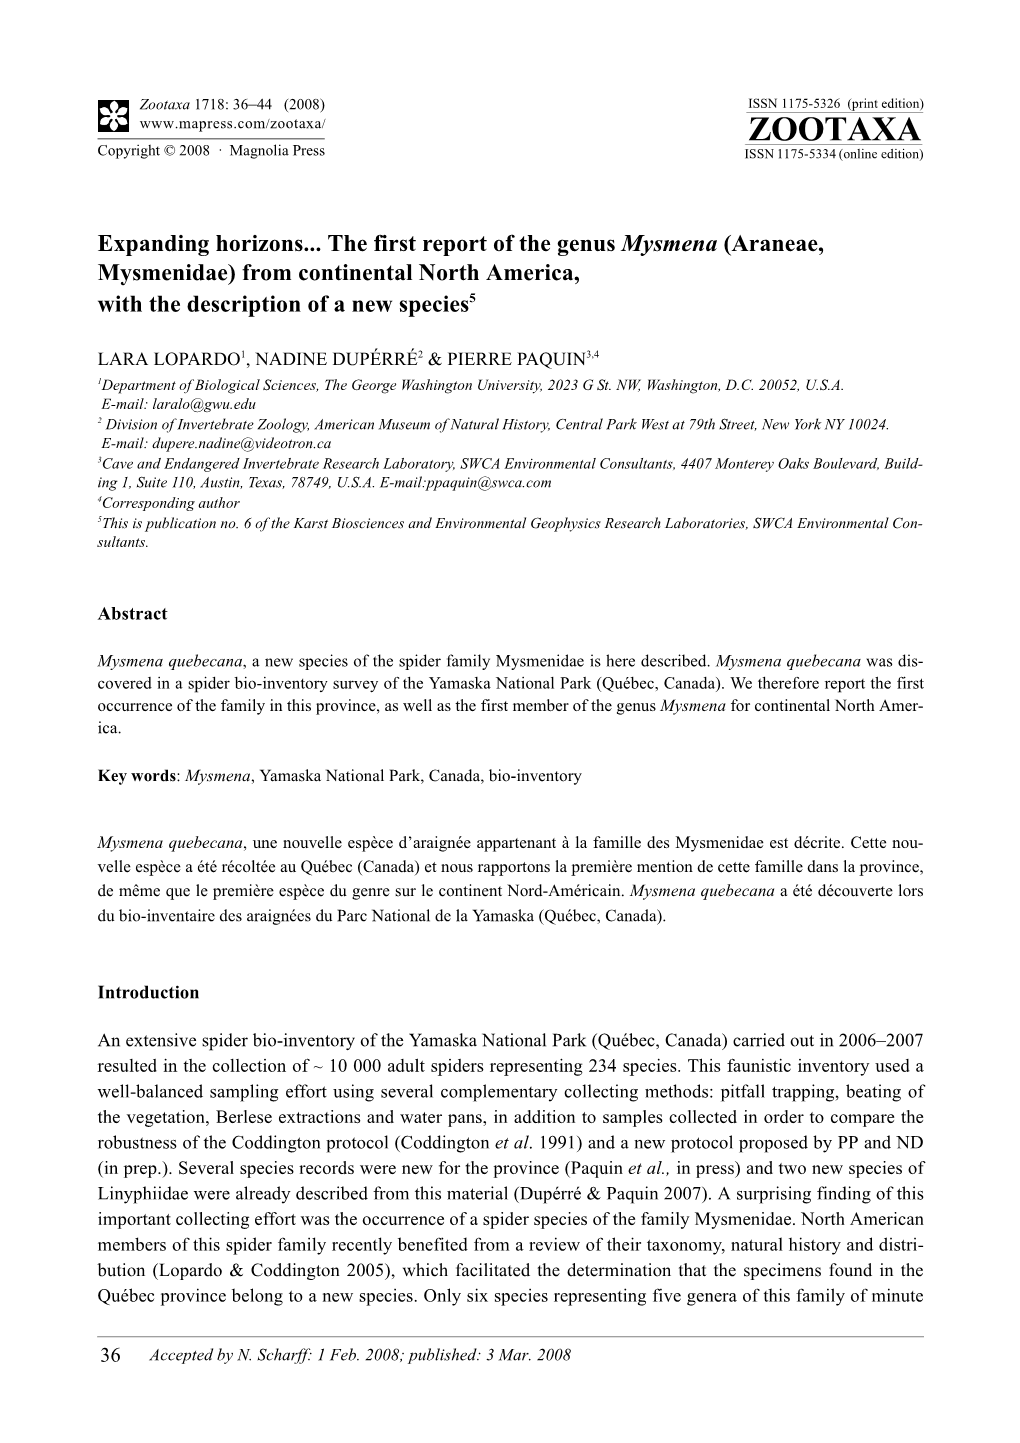 Zootaxa, Expanding Horizons... the First Report of the Genus Mysmena